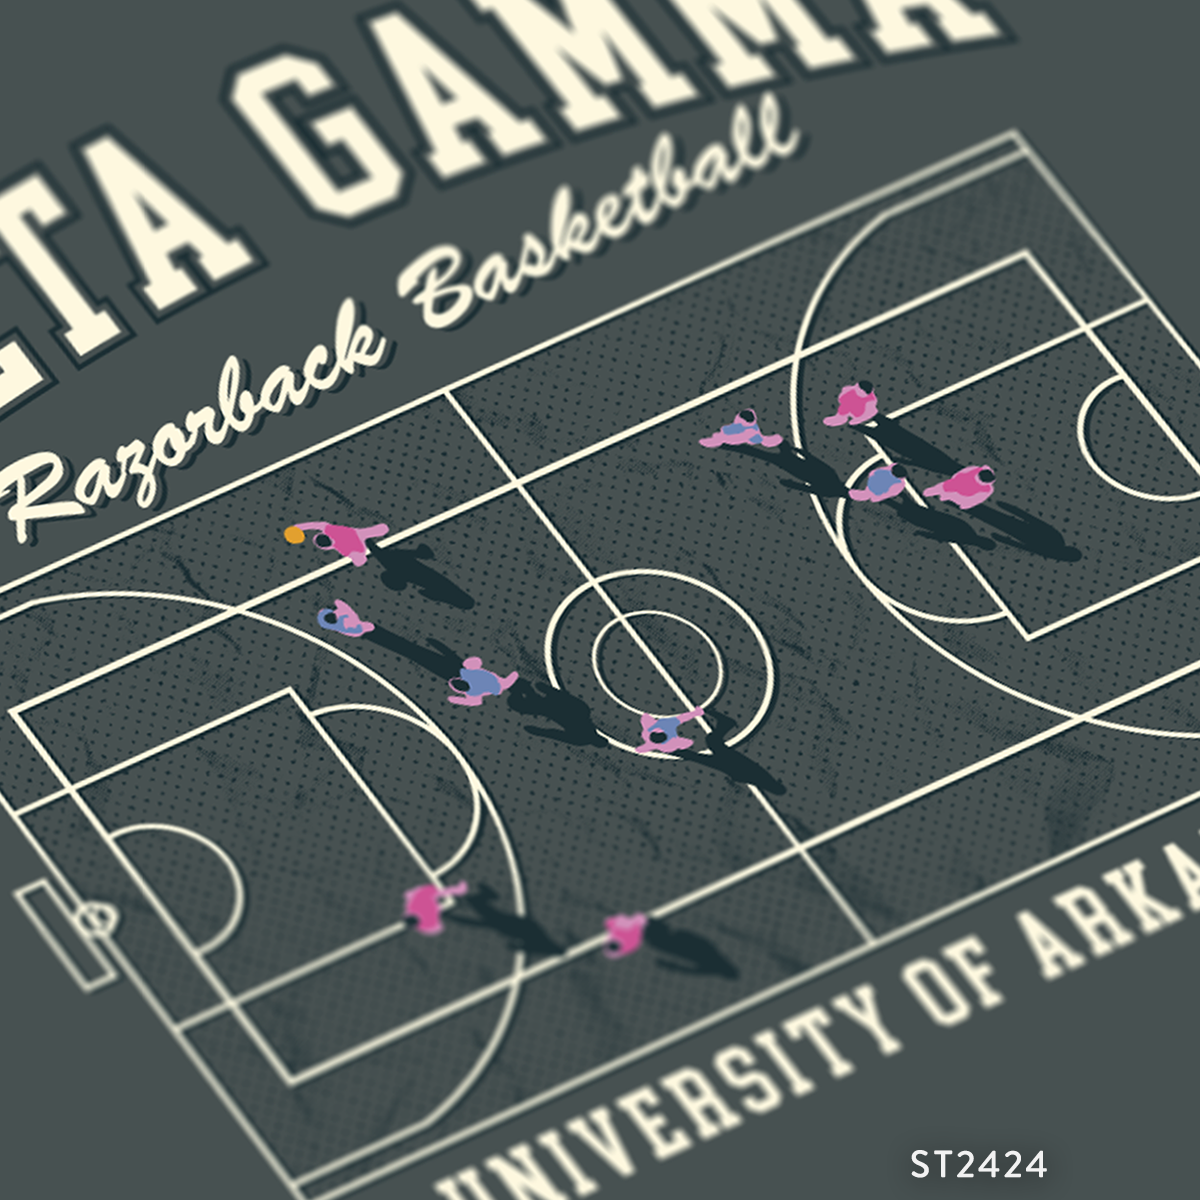 Delta Gamma Basketball Court PR T-Shirt Design